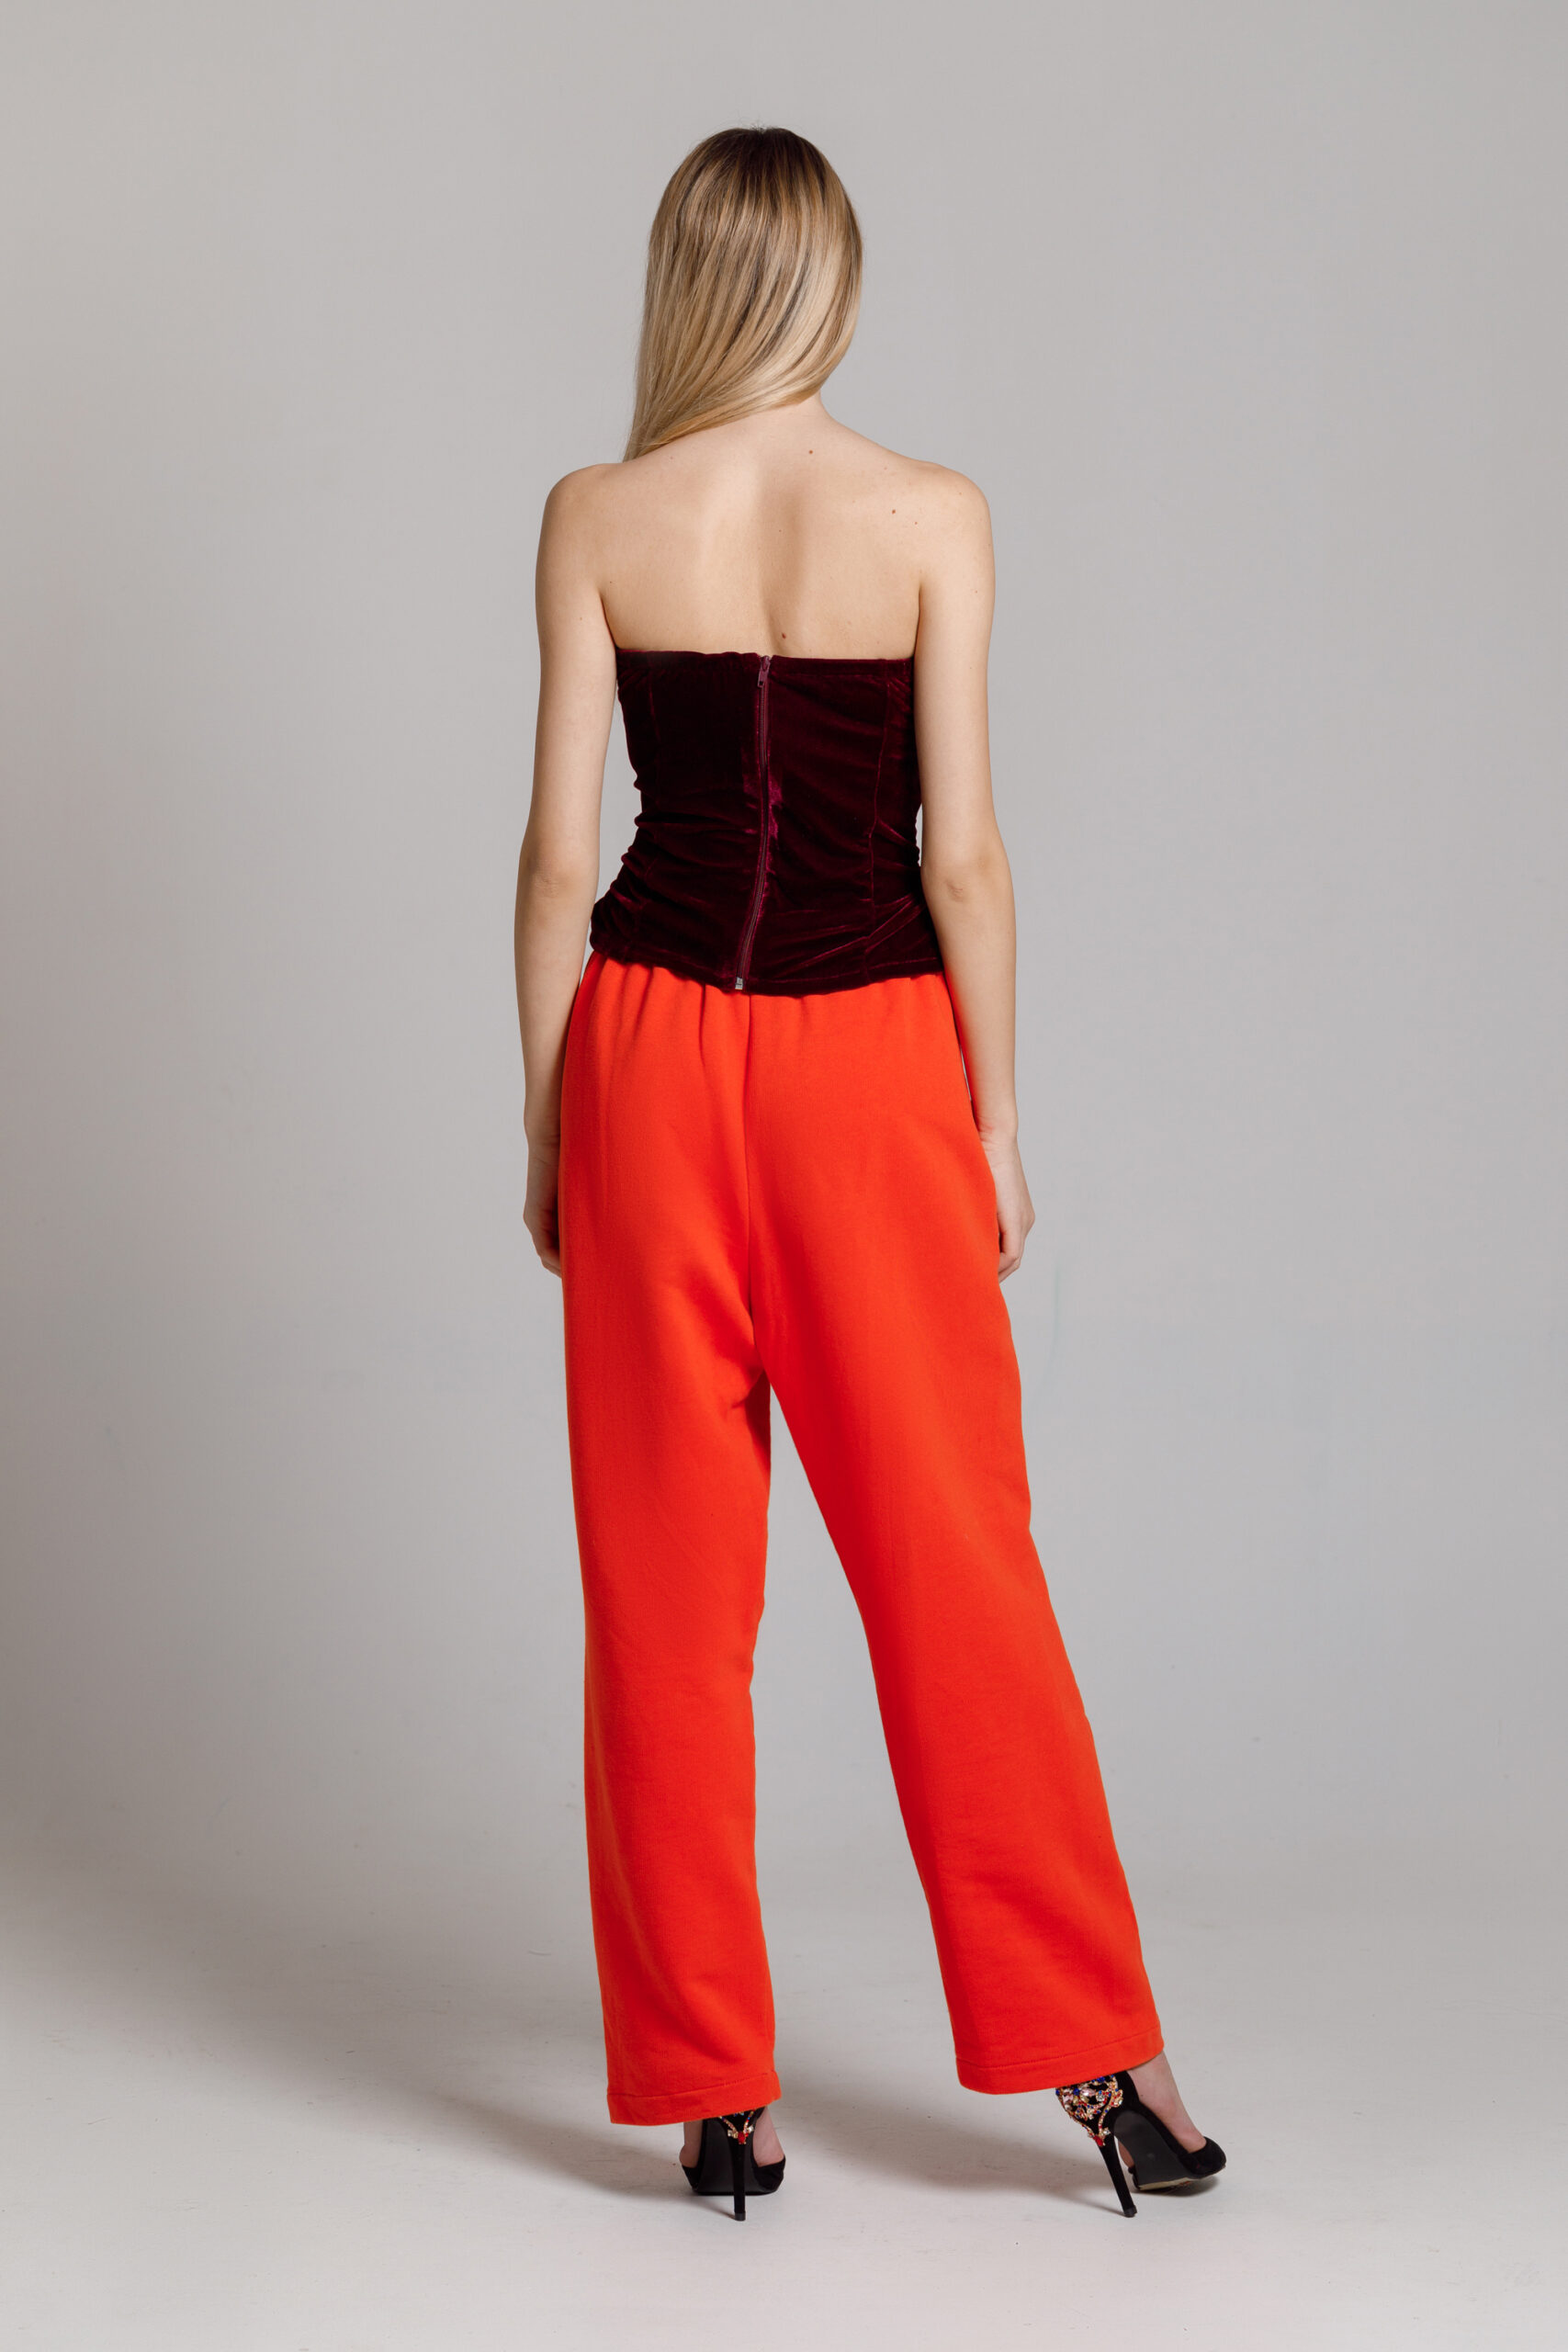 MARS orange trousers. Natural fabrics, original design, handmade embroidery